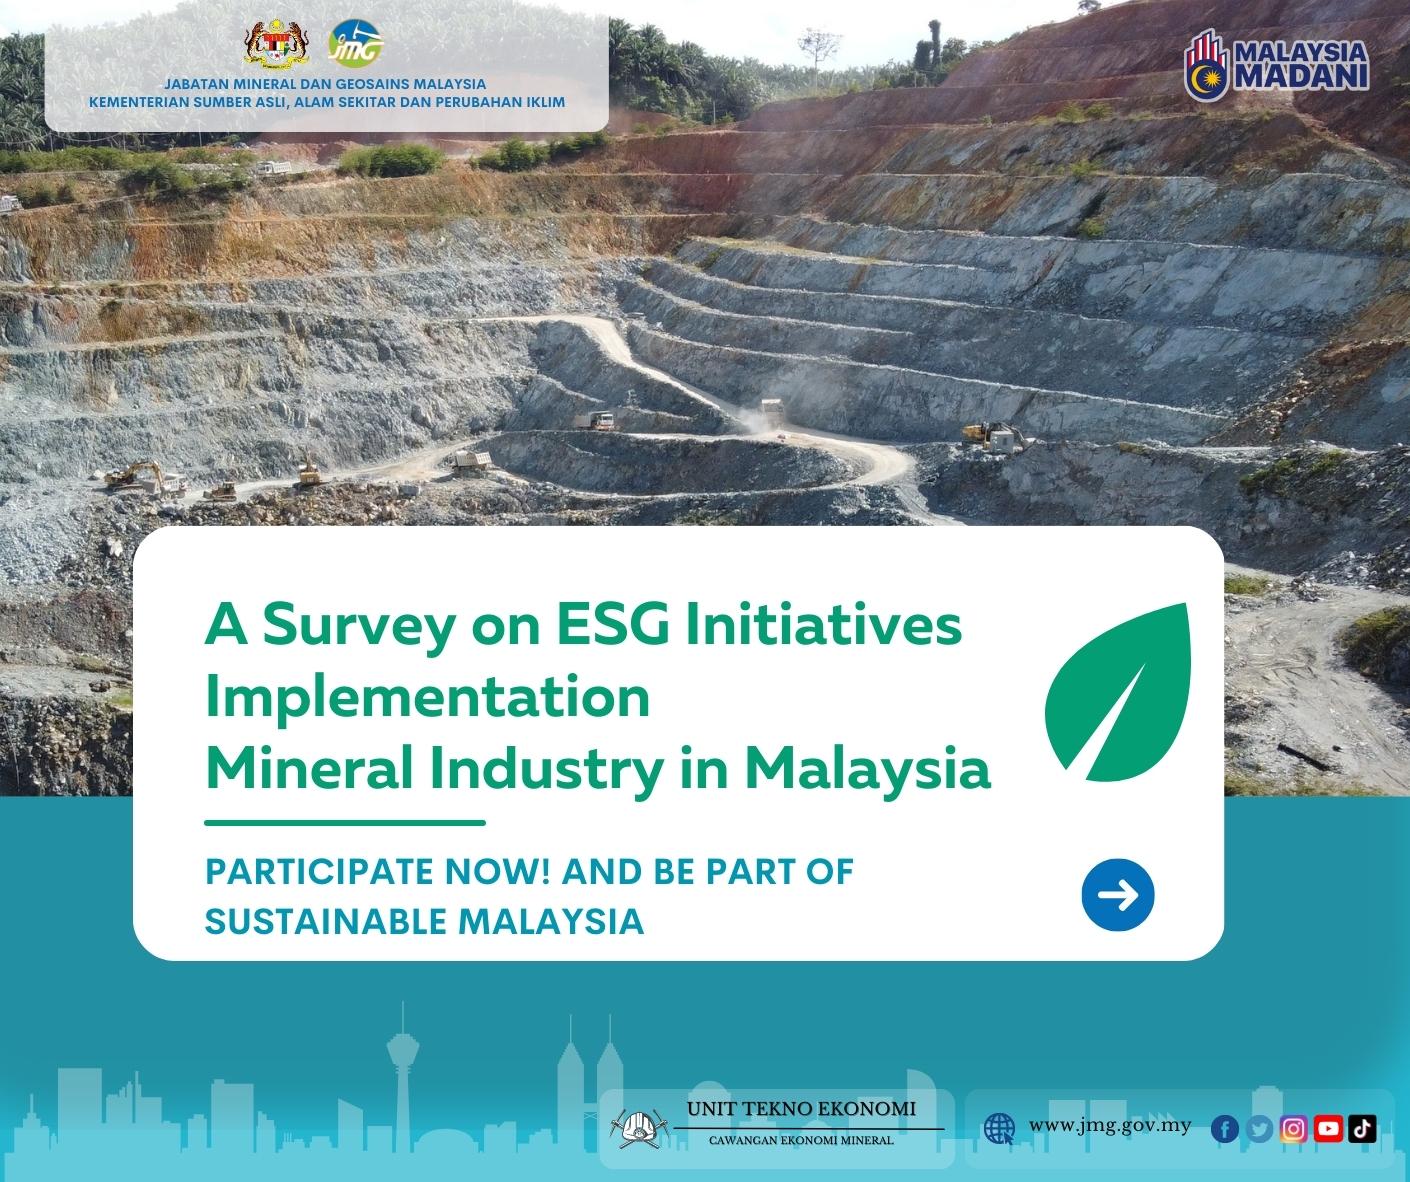 Kajian Soal Selidik “A Survey on ESG Implementation in Mineral Industry in Malaysia”